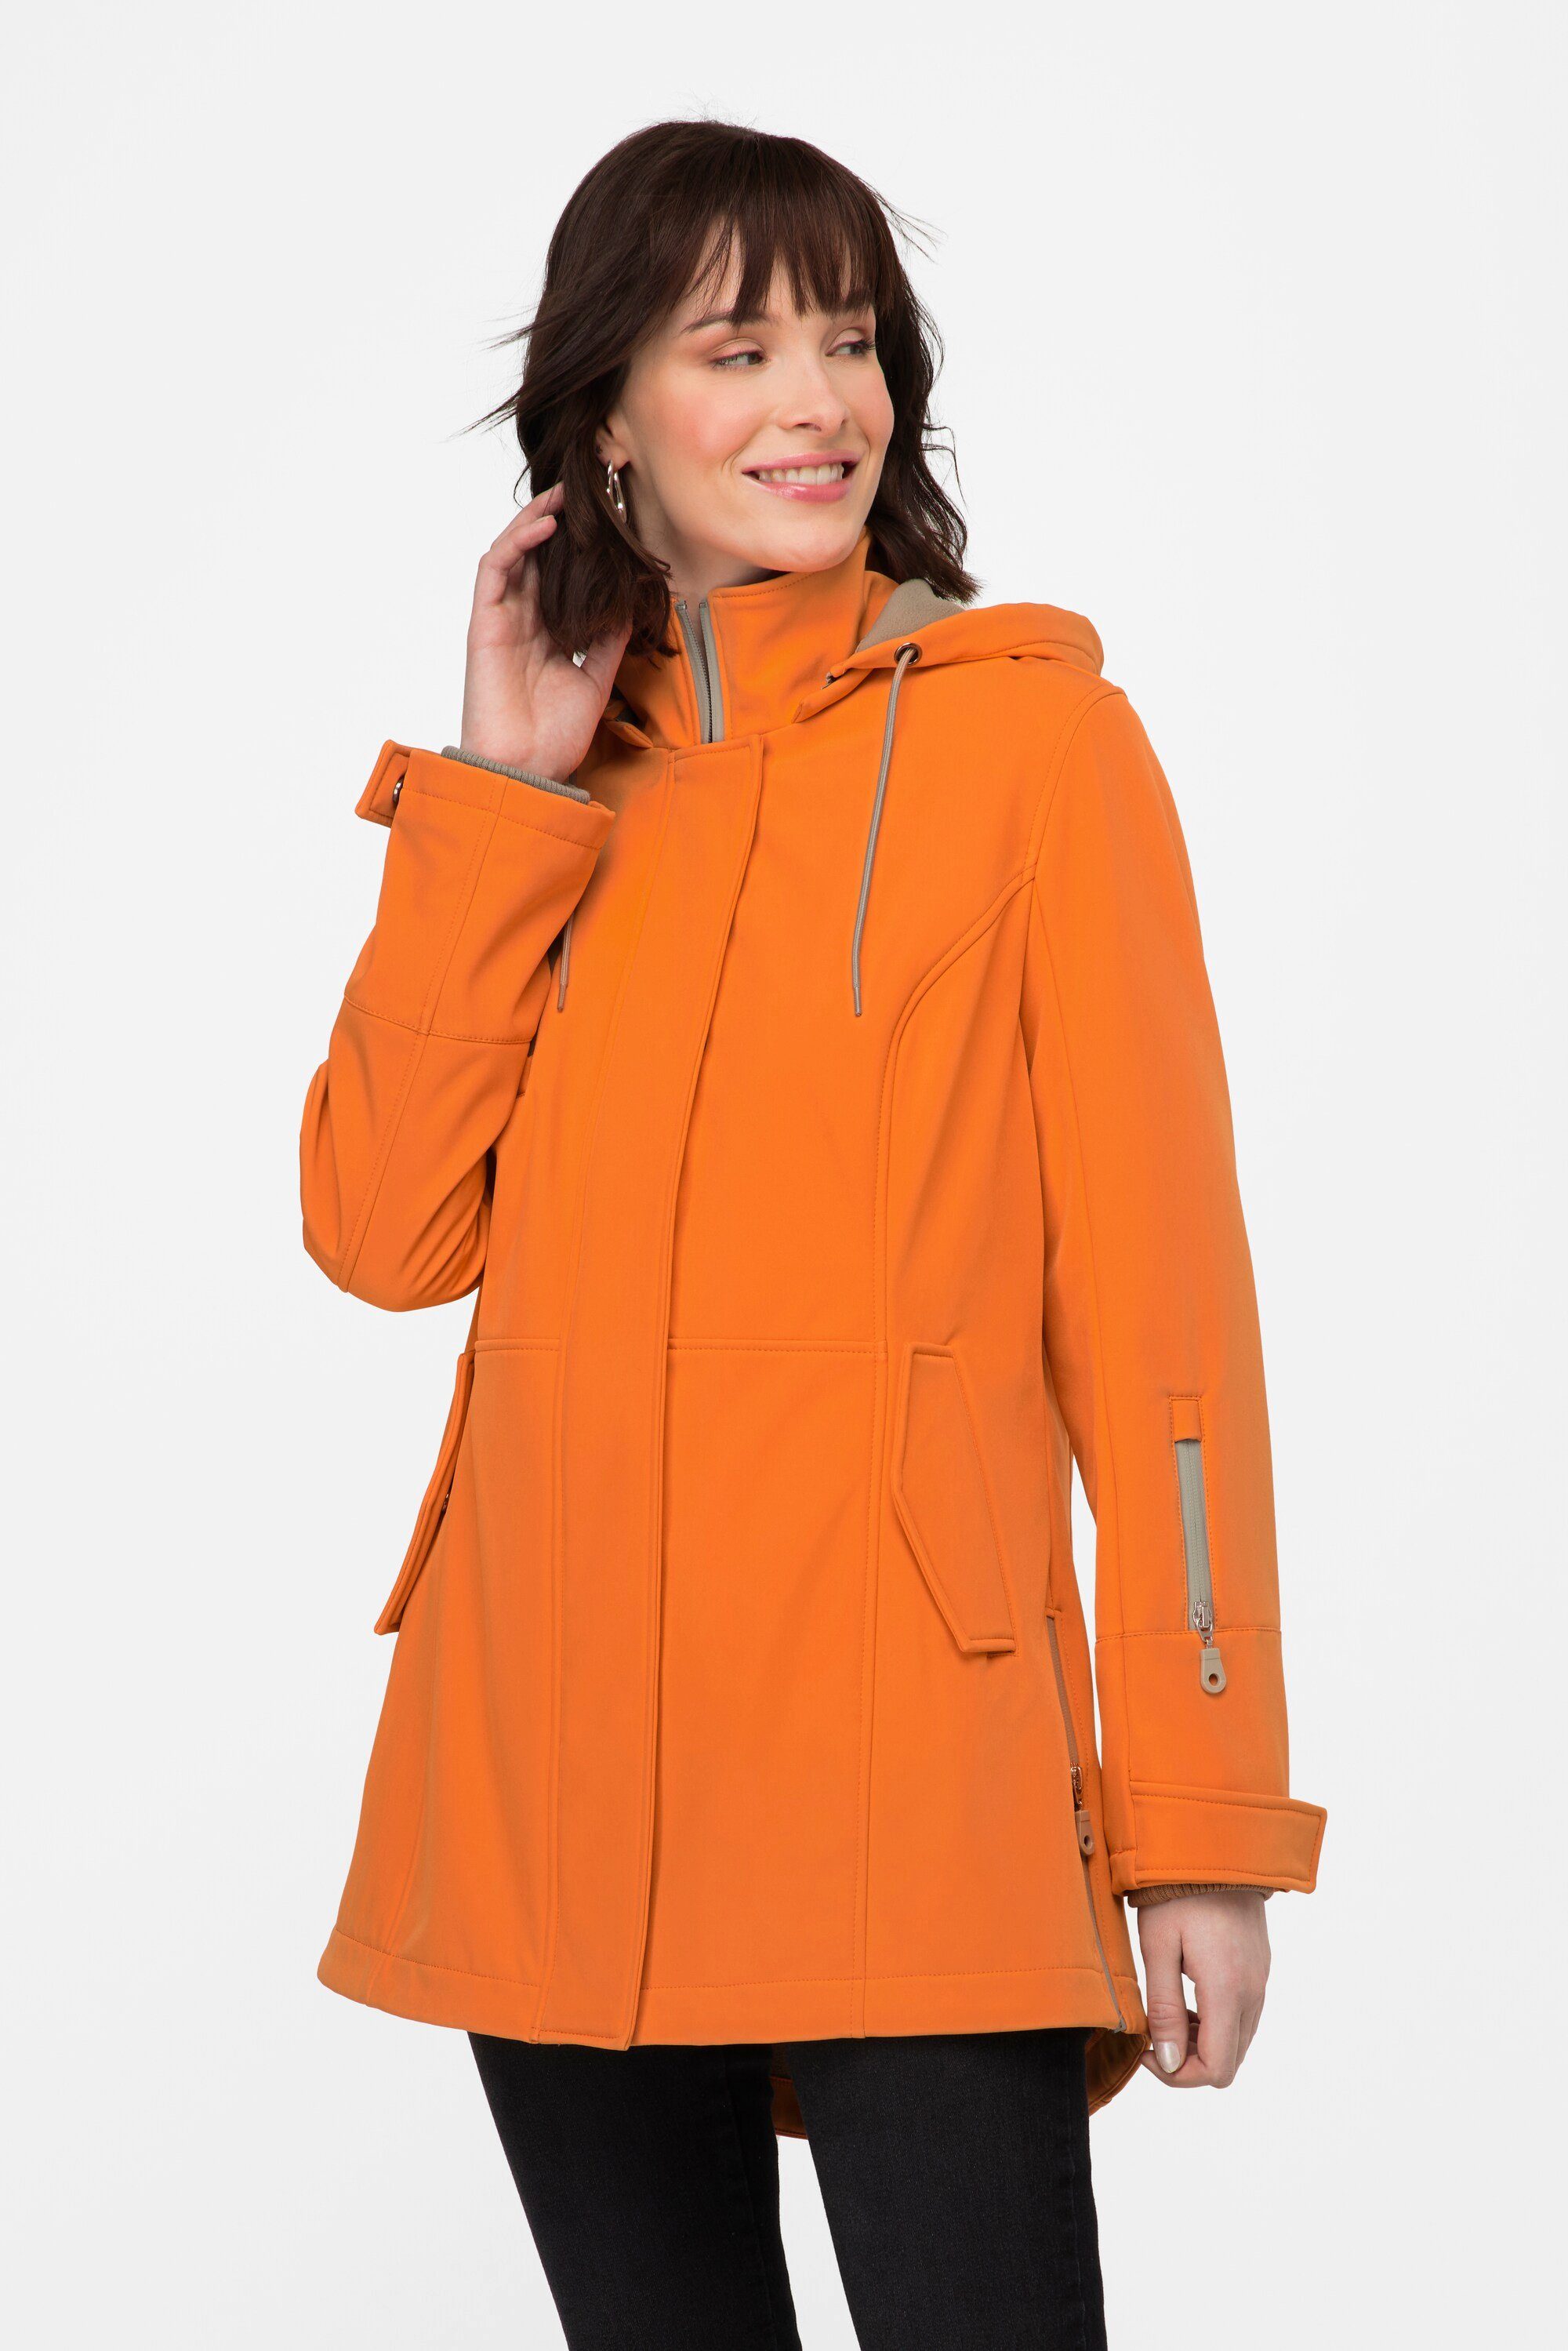 Laurasøn Softshelljacke Softshell-Jacke wasserabweisend Kapuze kräftiges orange